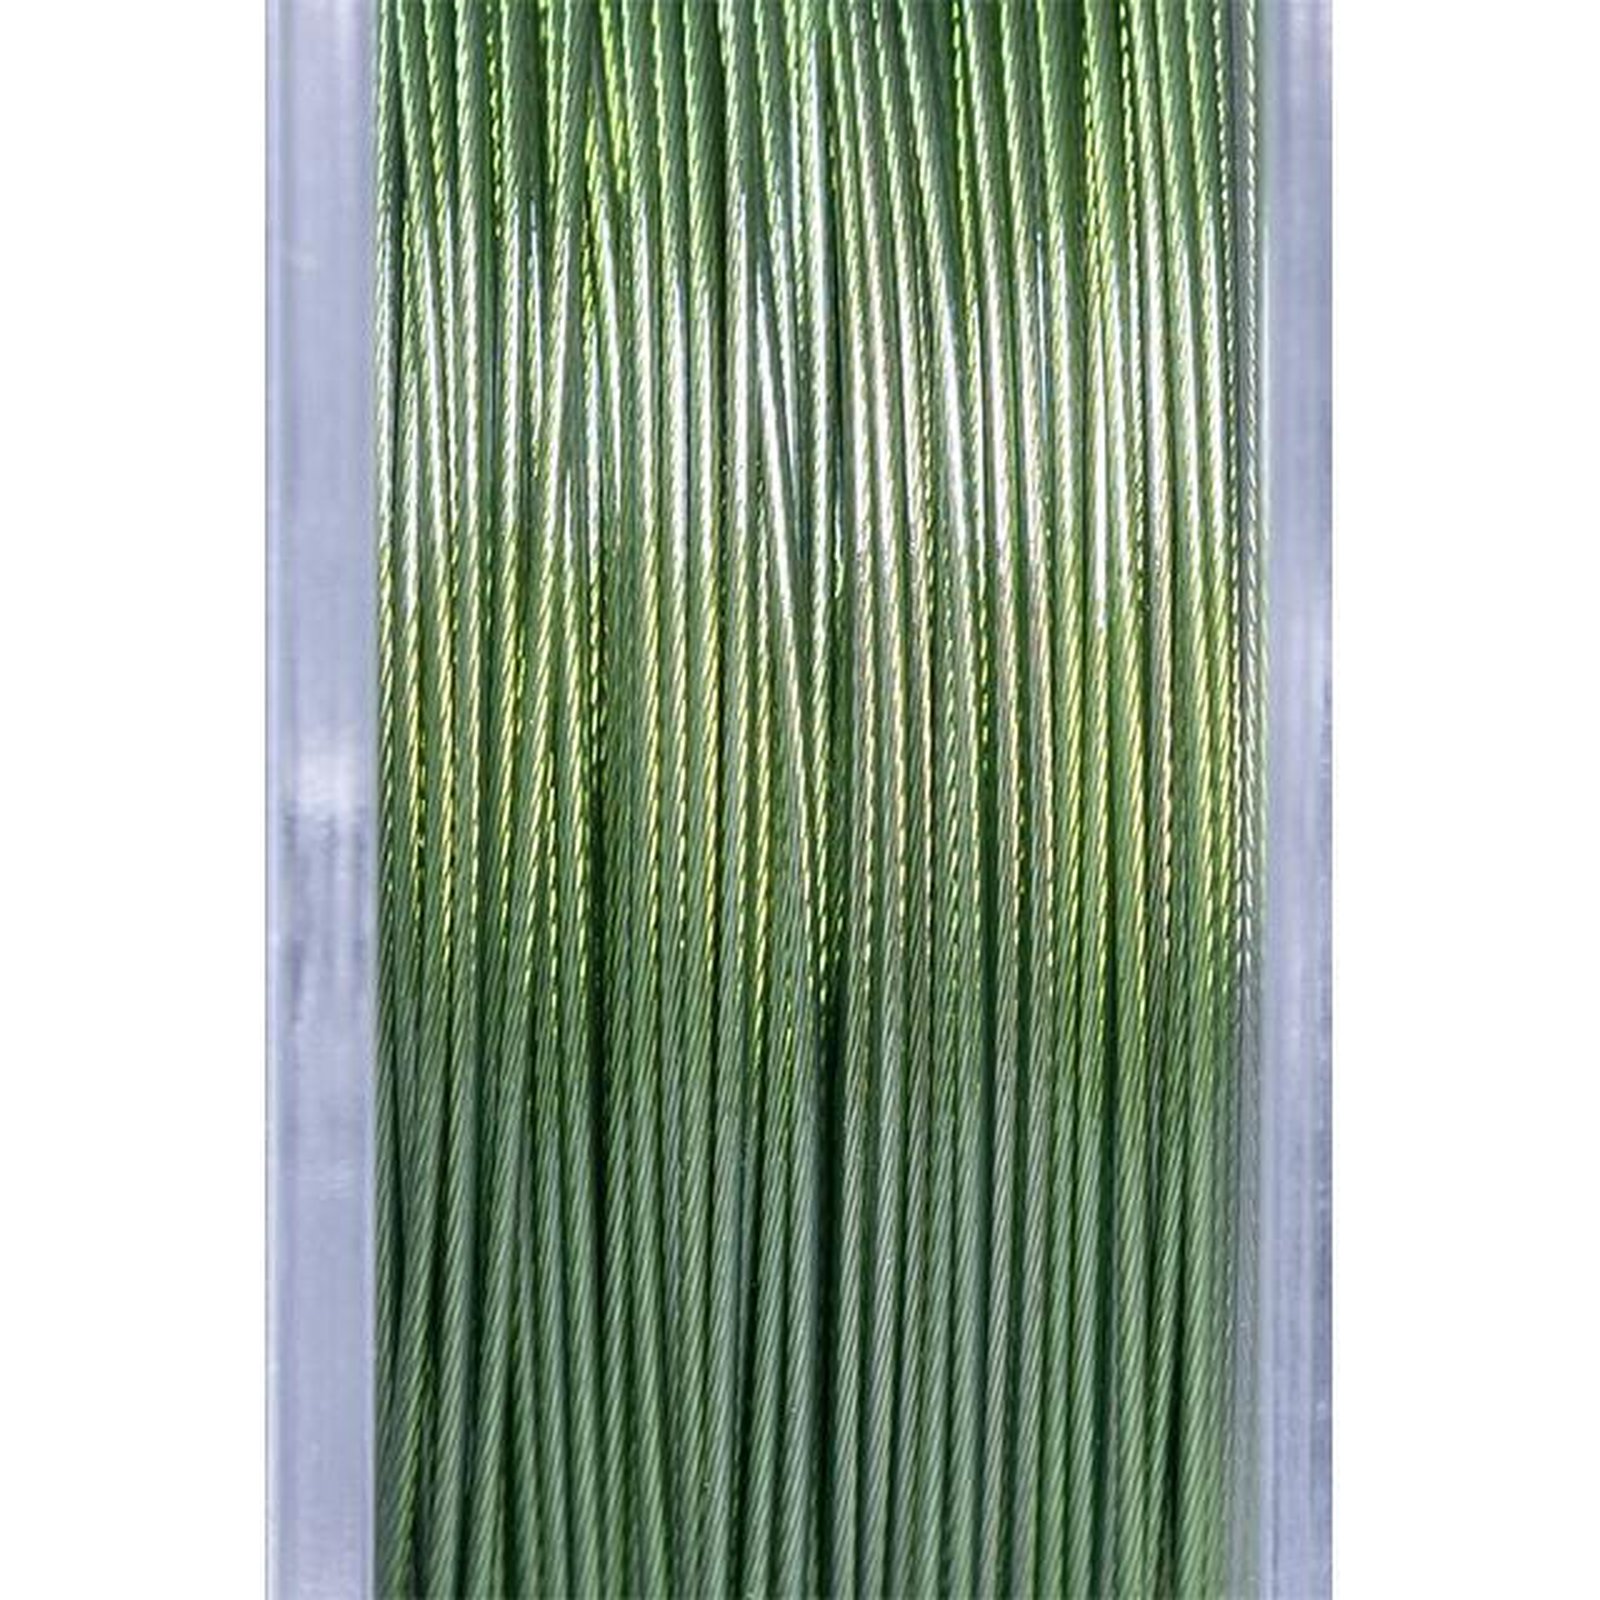 Drennan Green Pike Wire 15,0m 28lb - (12.7kg) 0.45mm